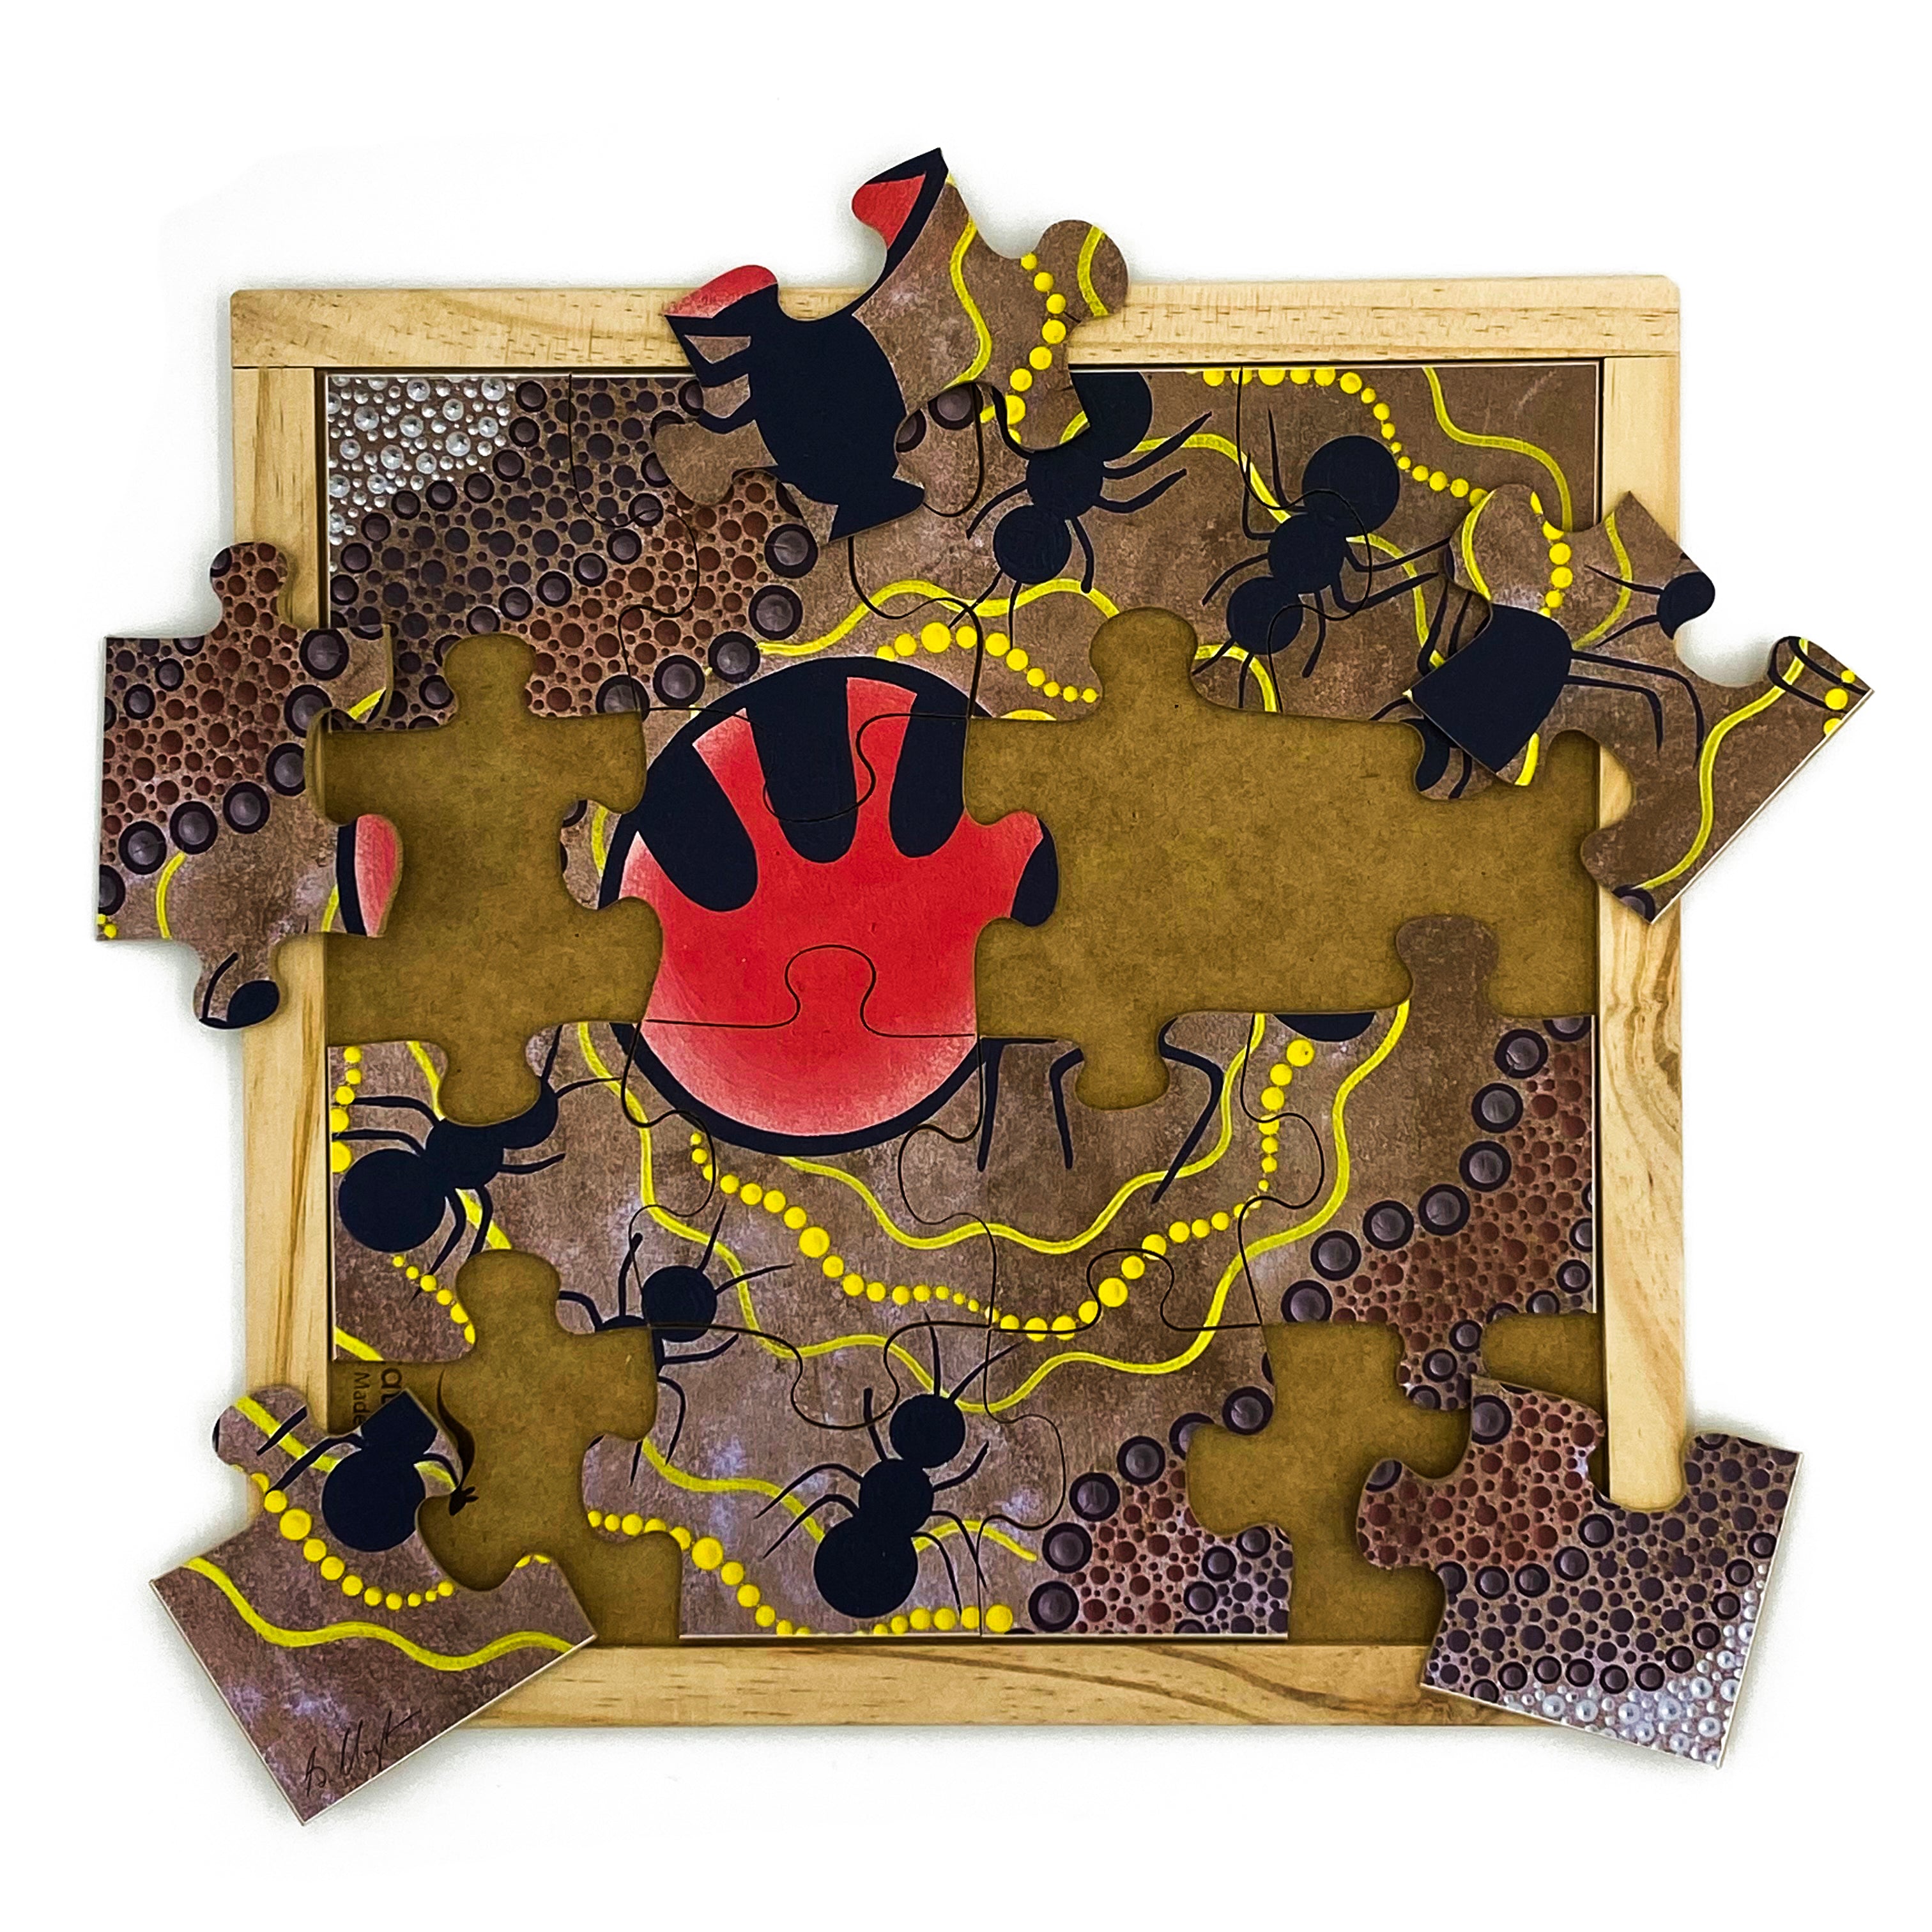 Aboriginal Art Bush Tucker Puzzle Set of 4